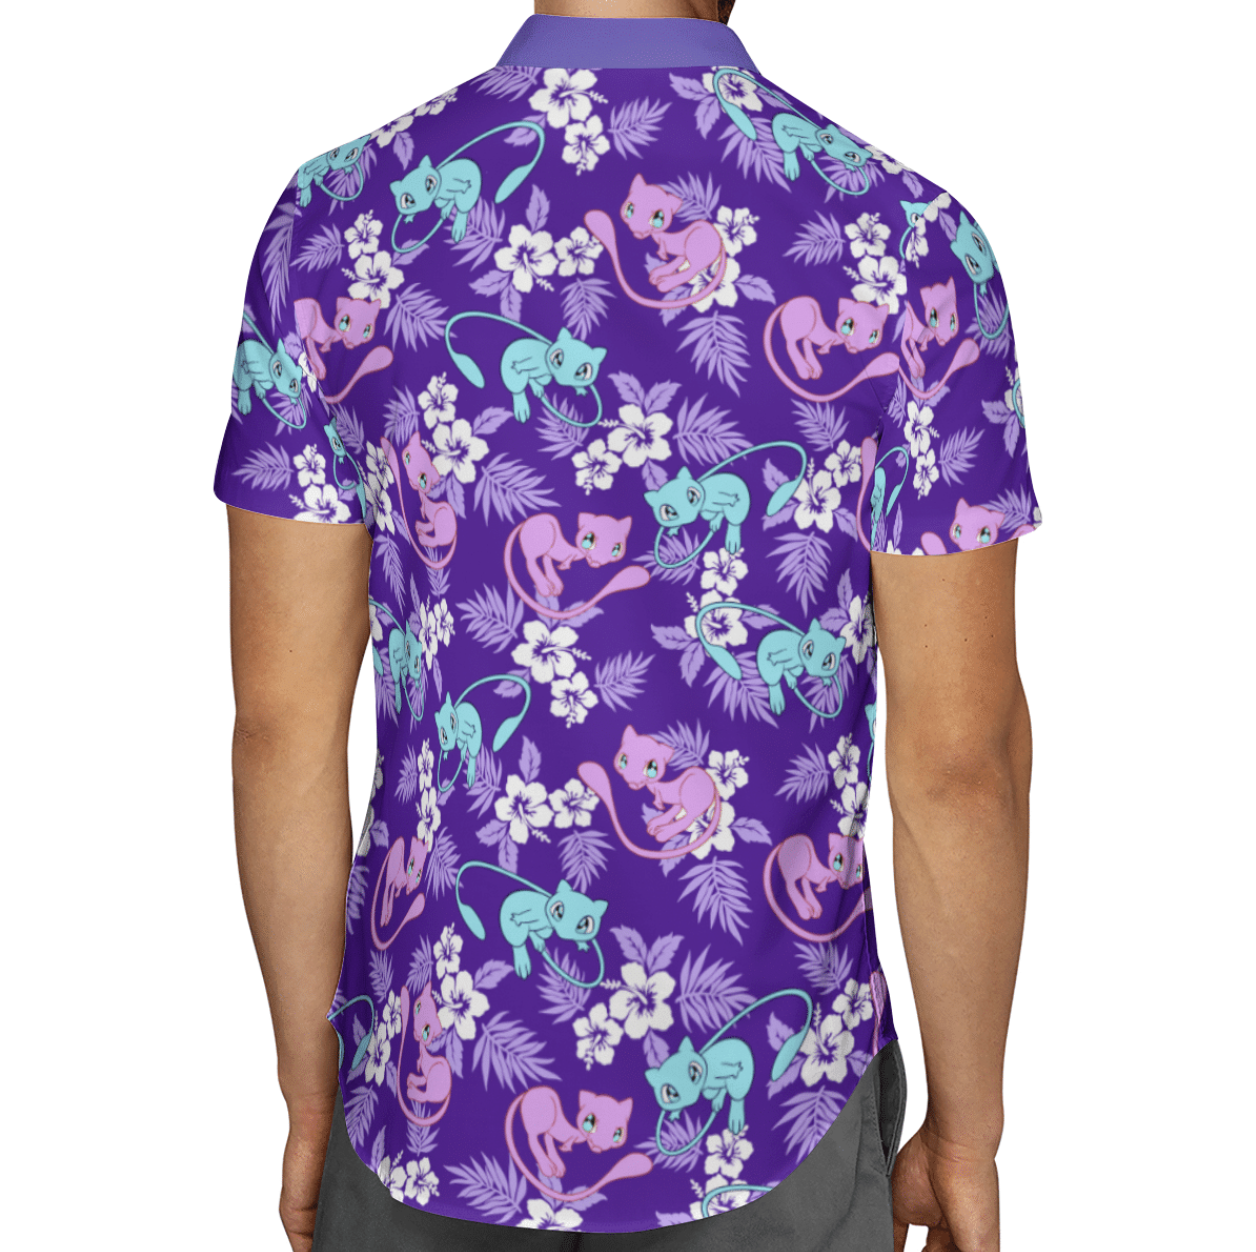 Mew Tropical Beach Pokemon Hawaiian Shirt